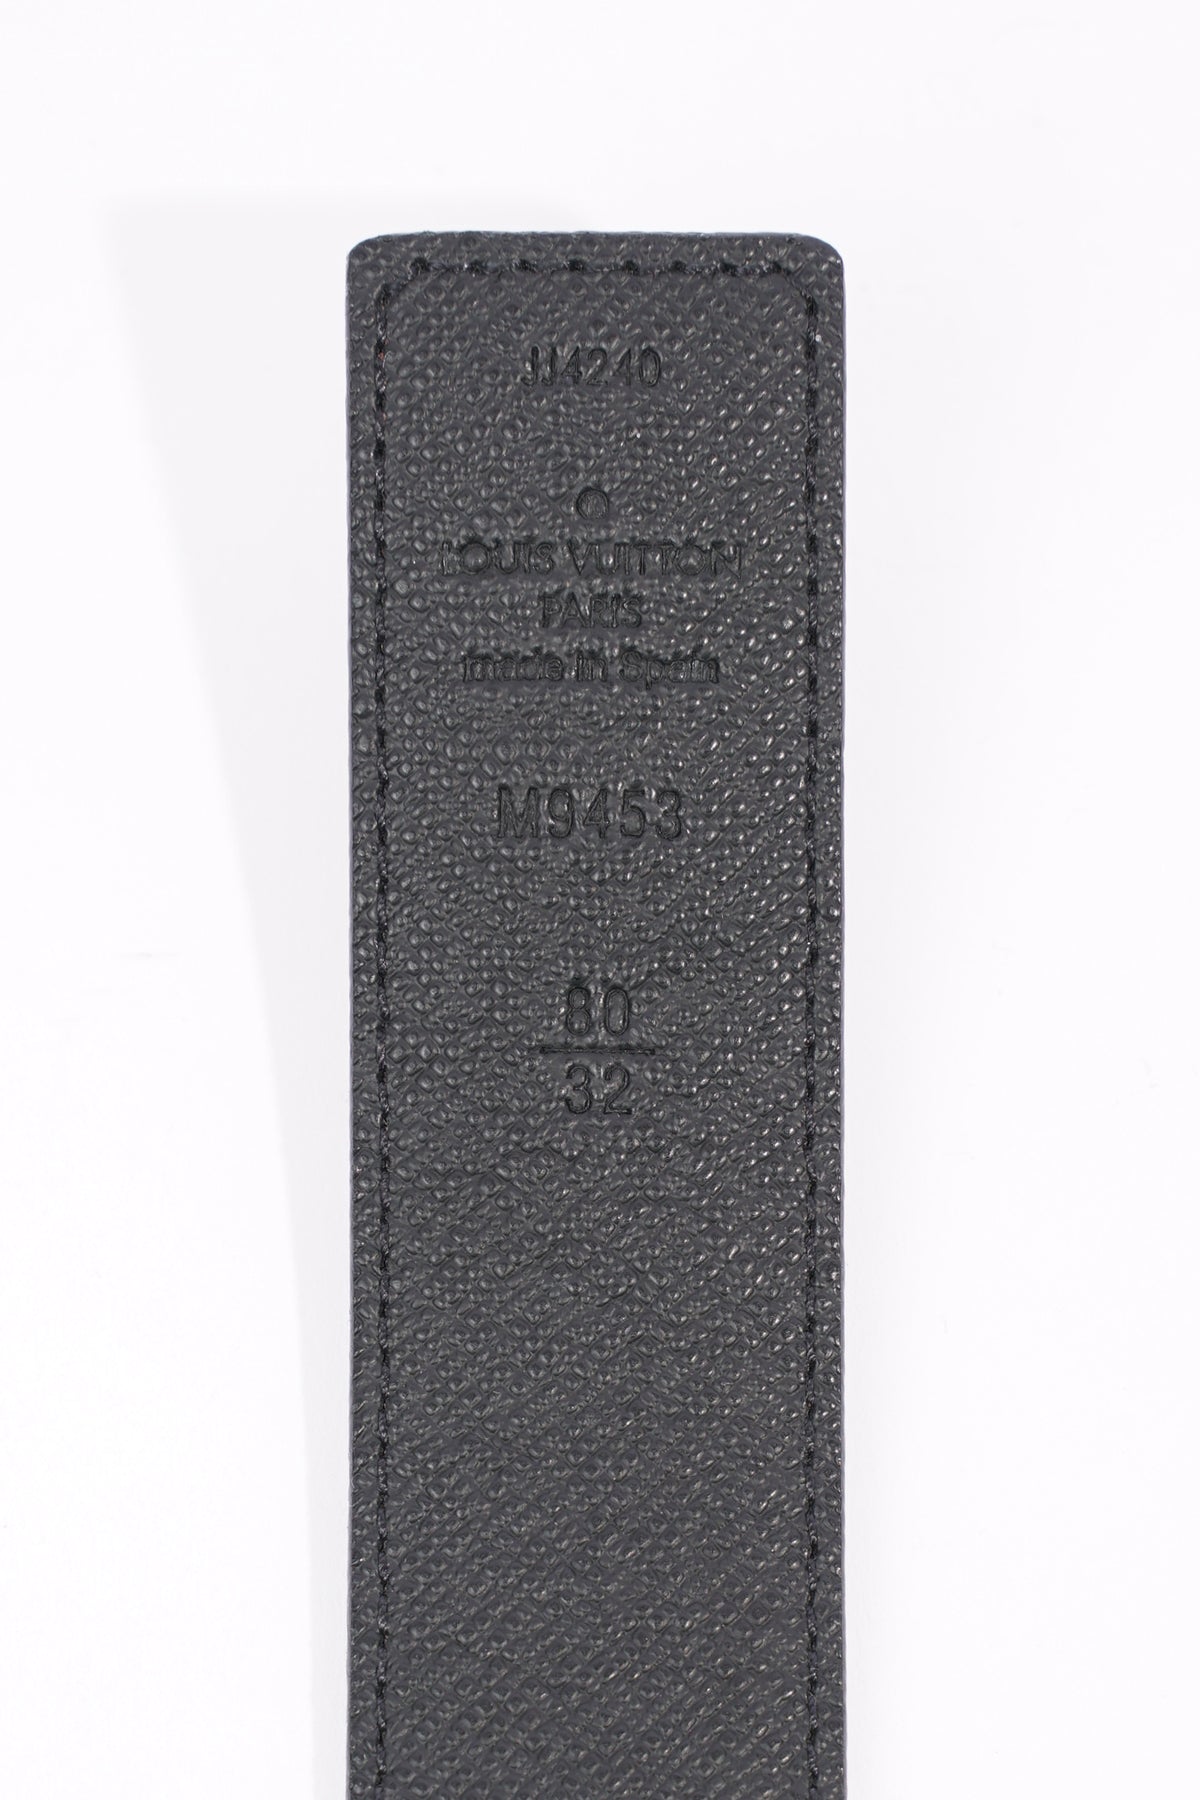 Louis Vuitton Monogram Multicolore Initials Belt - Size 32 / 80